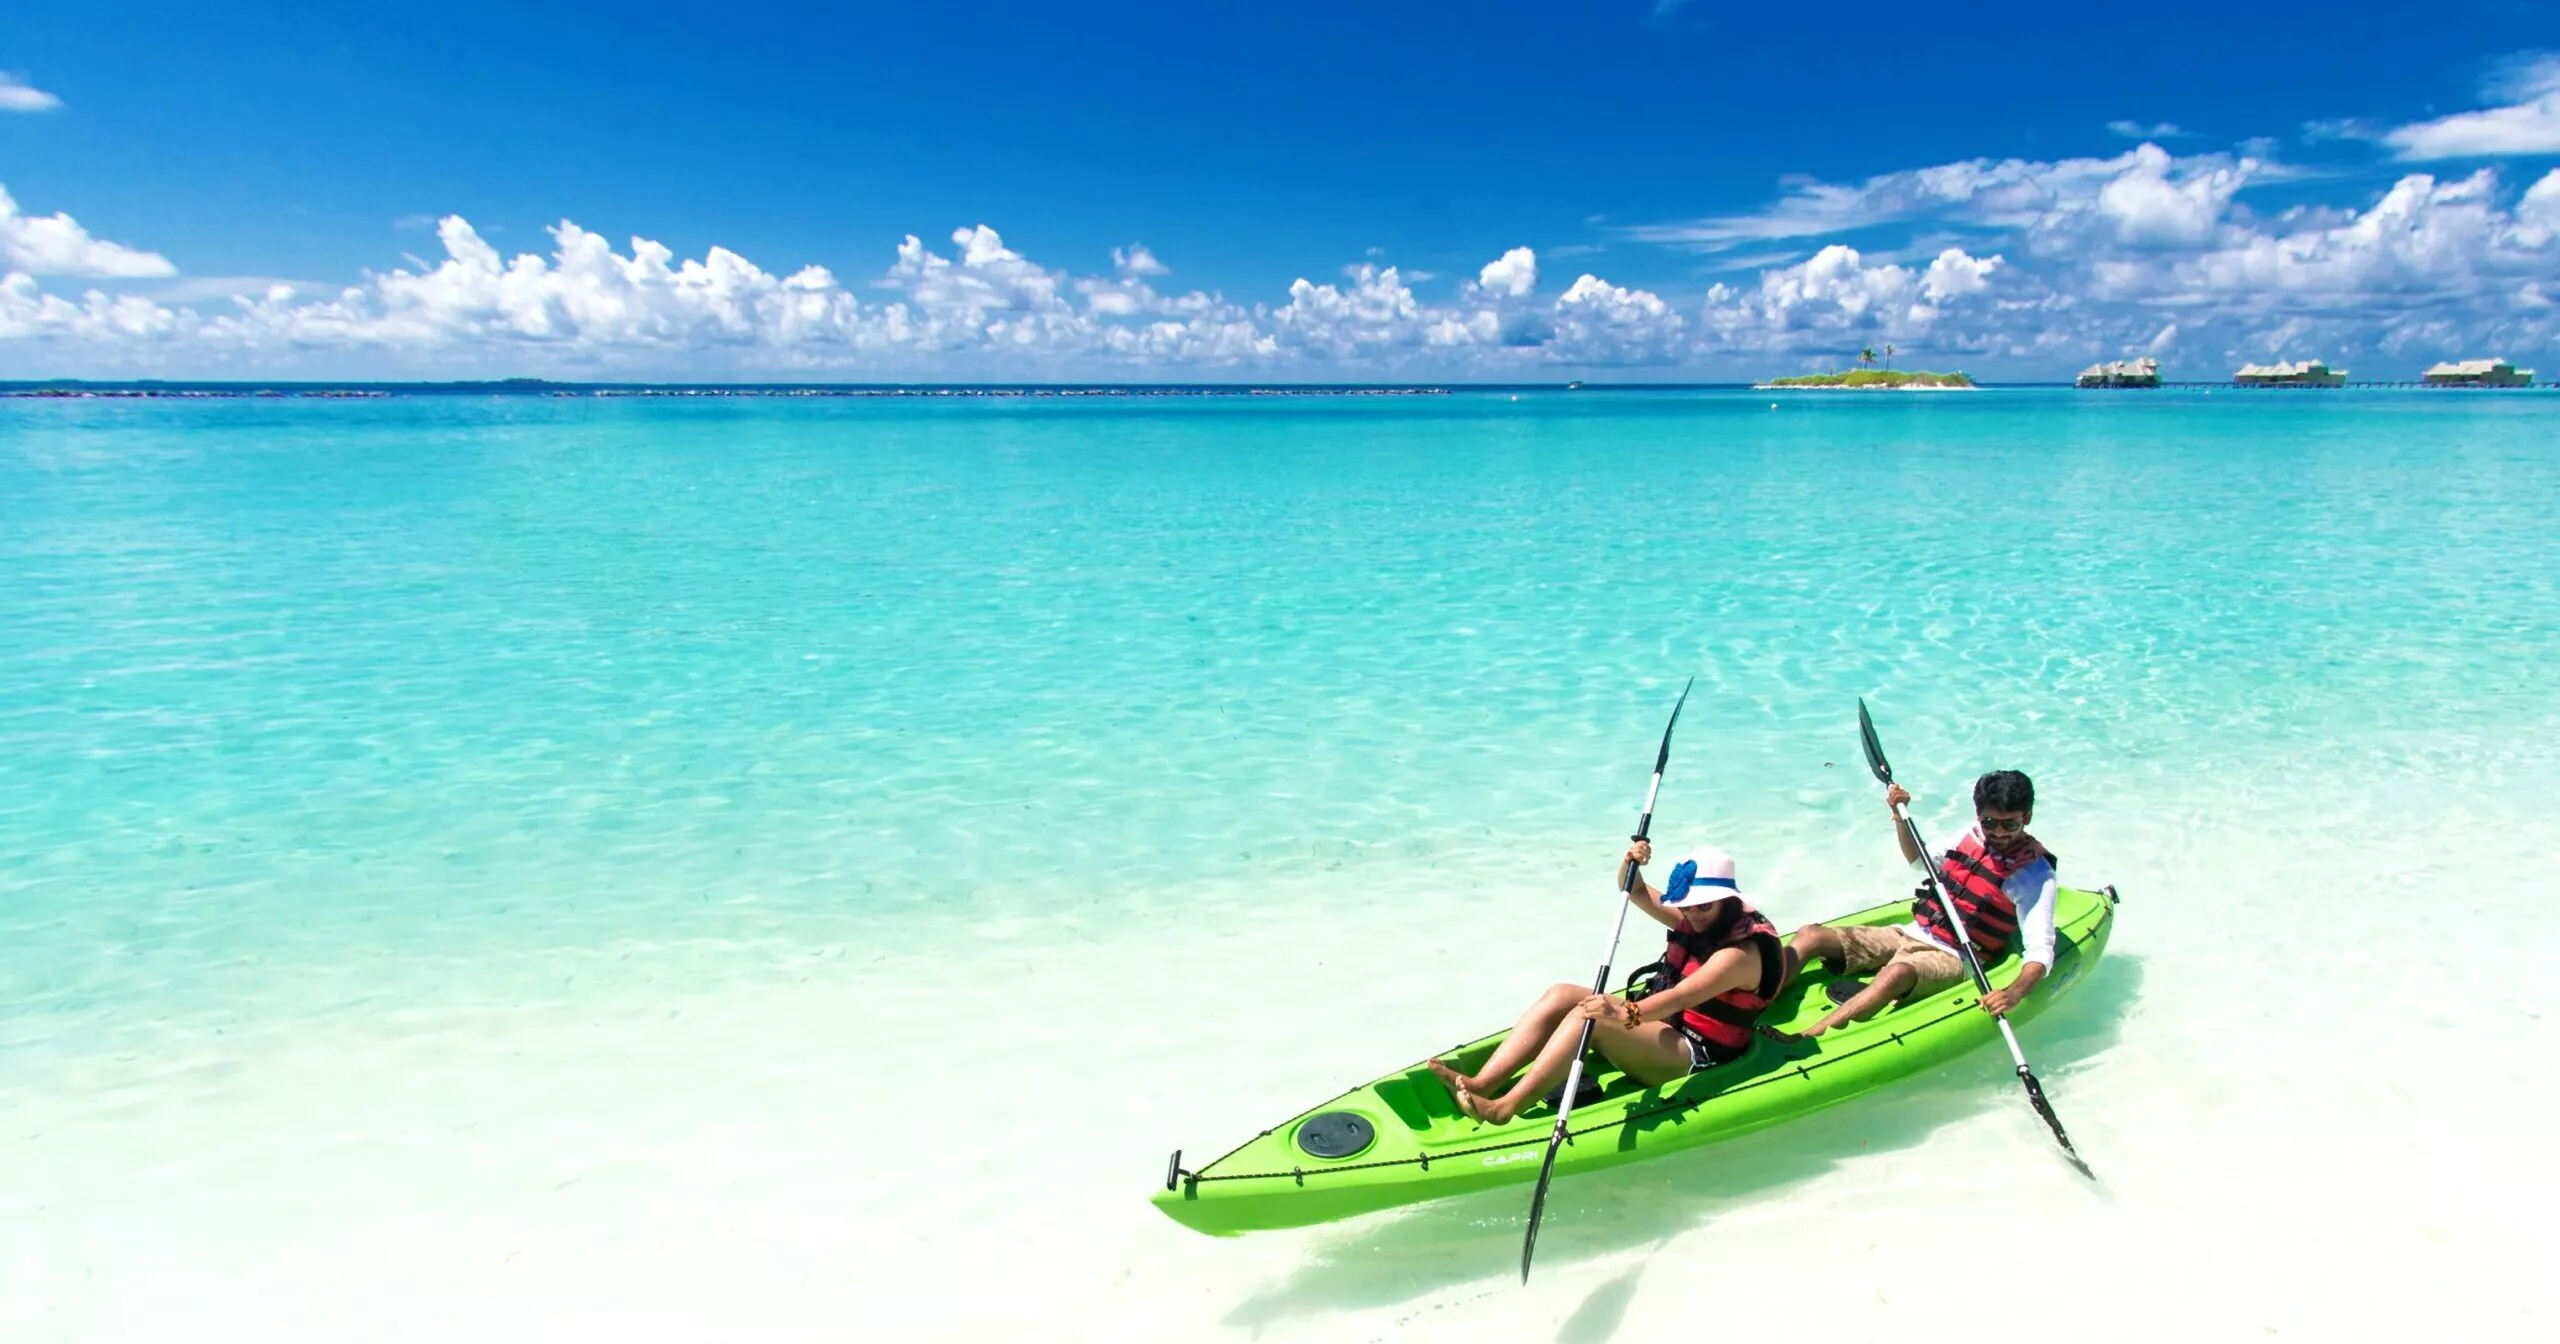 Delphi Watersports Aruba in Aruba, Caribbean | Kayaking & Canoeing,Snorkelling - Rated 4.4